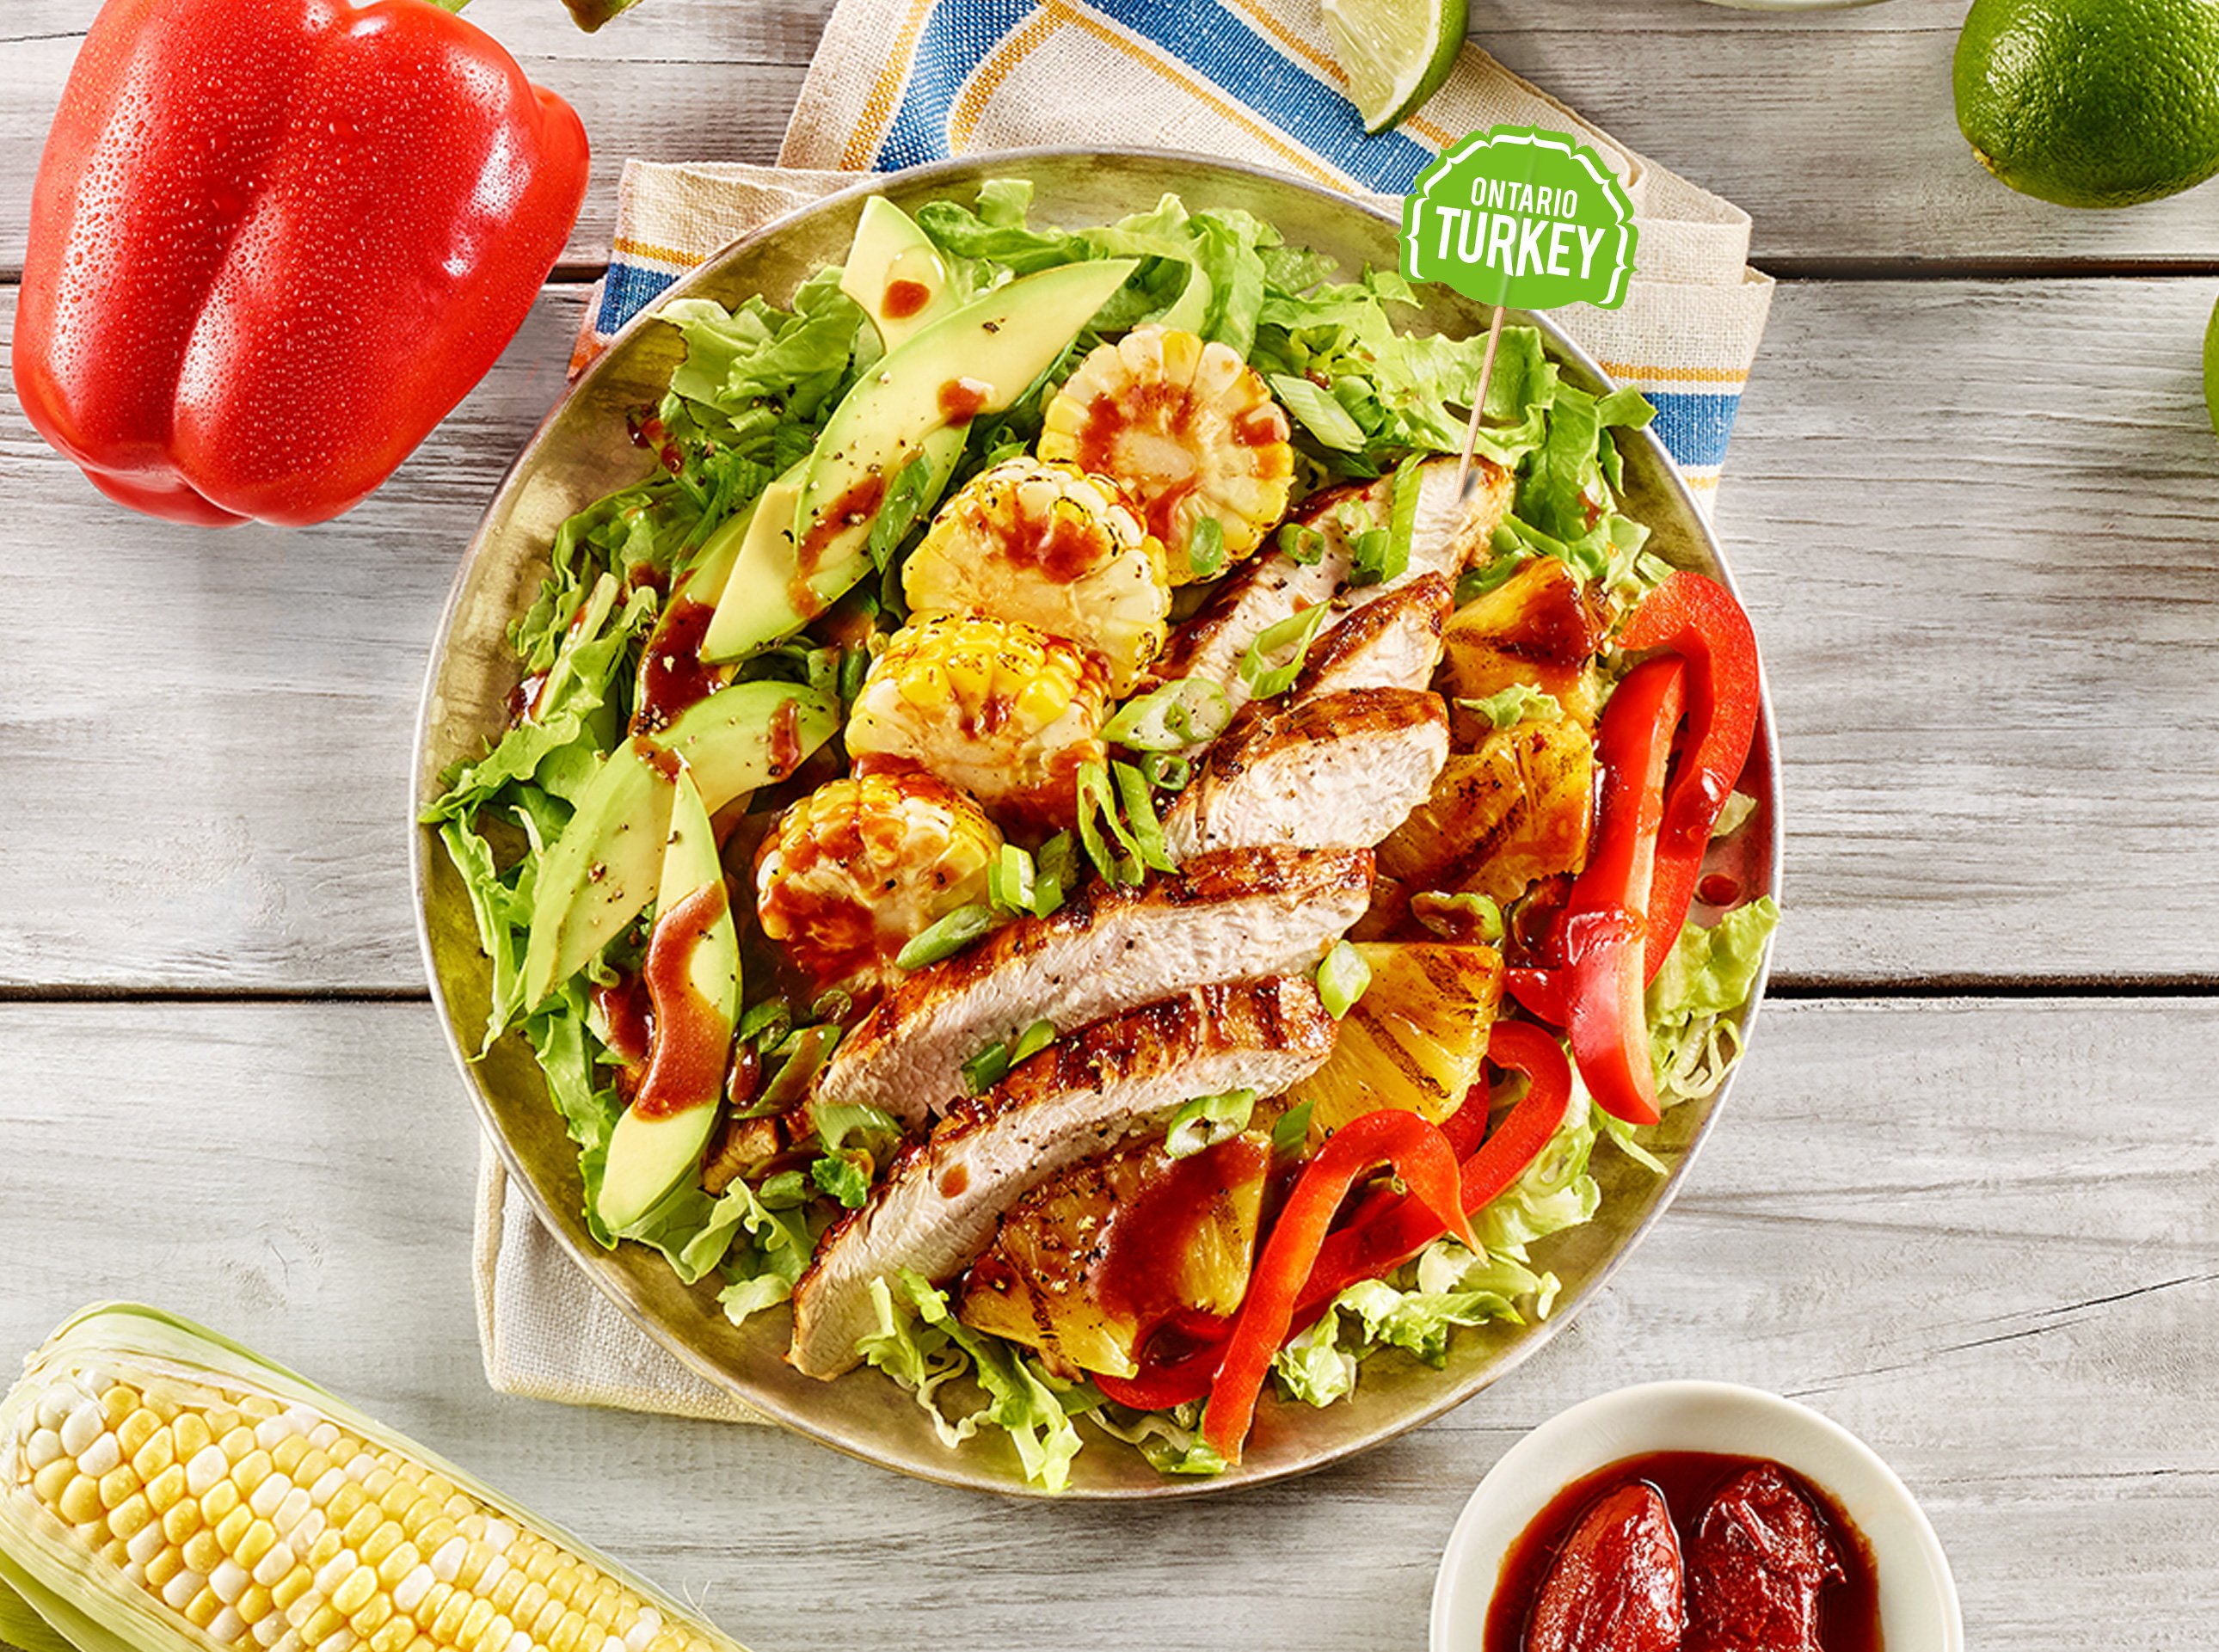 California Grilled Turkey Chef’s Salad